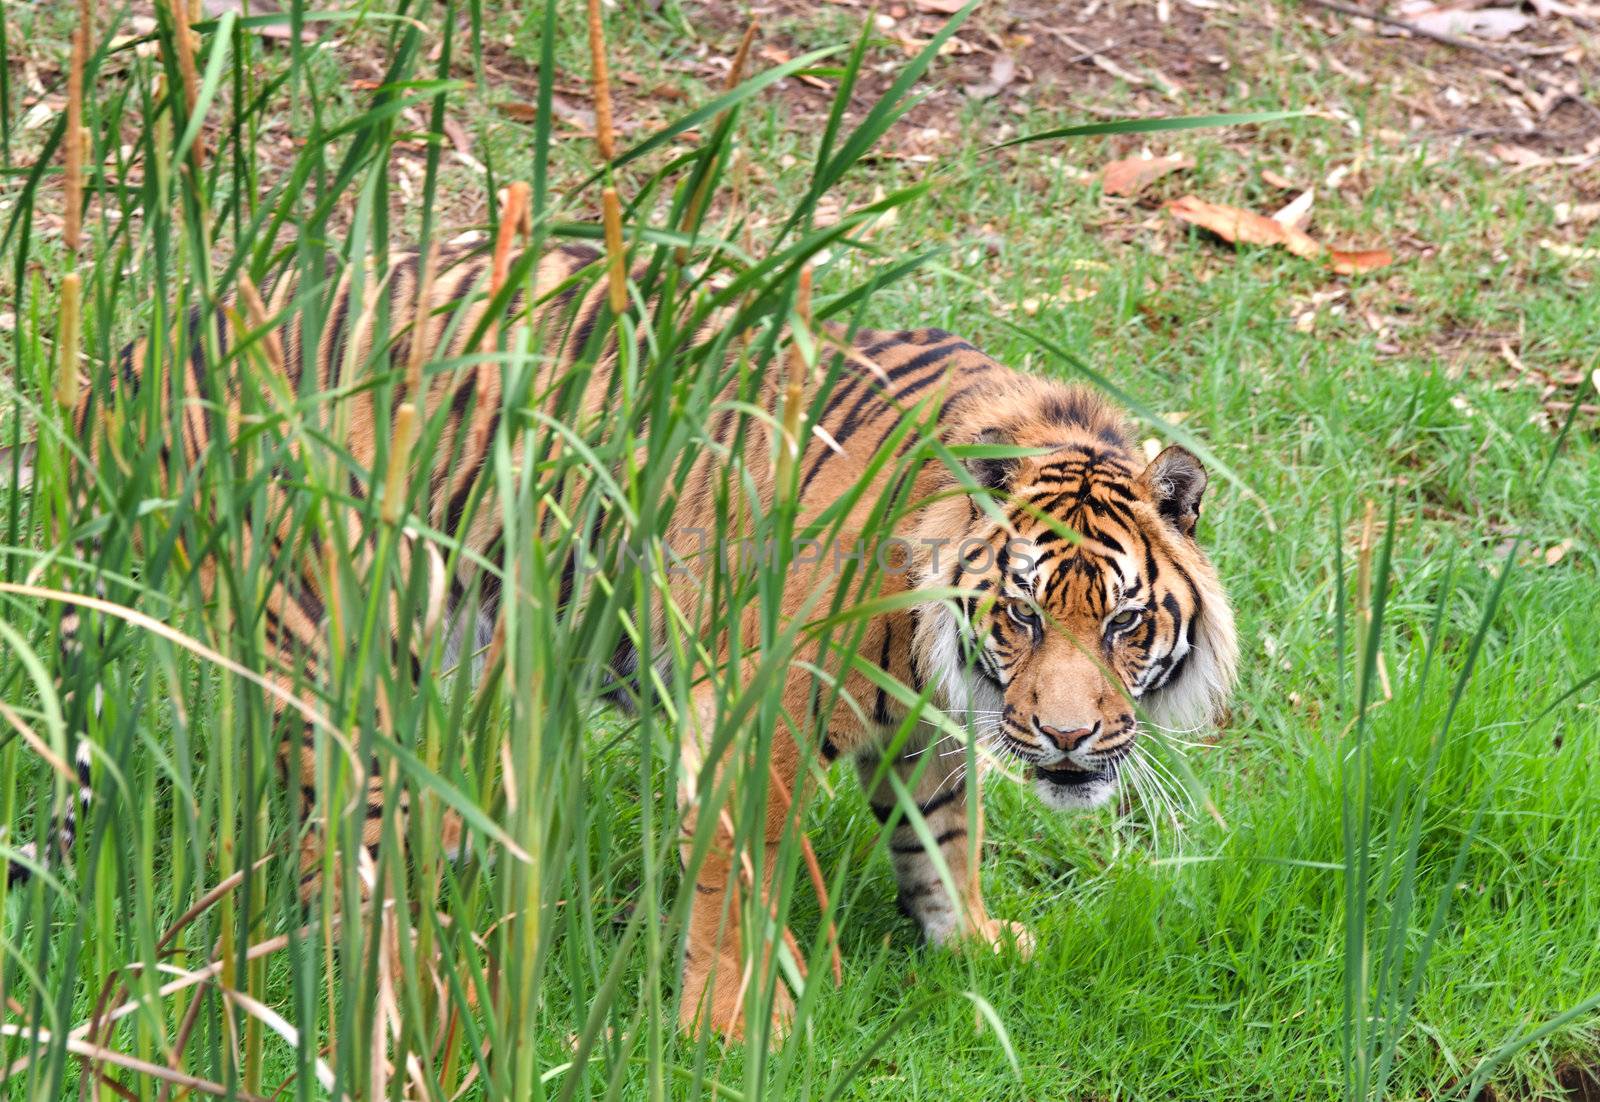 sumatran tiger by clearviewstock